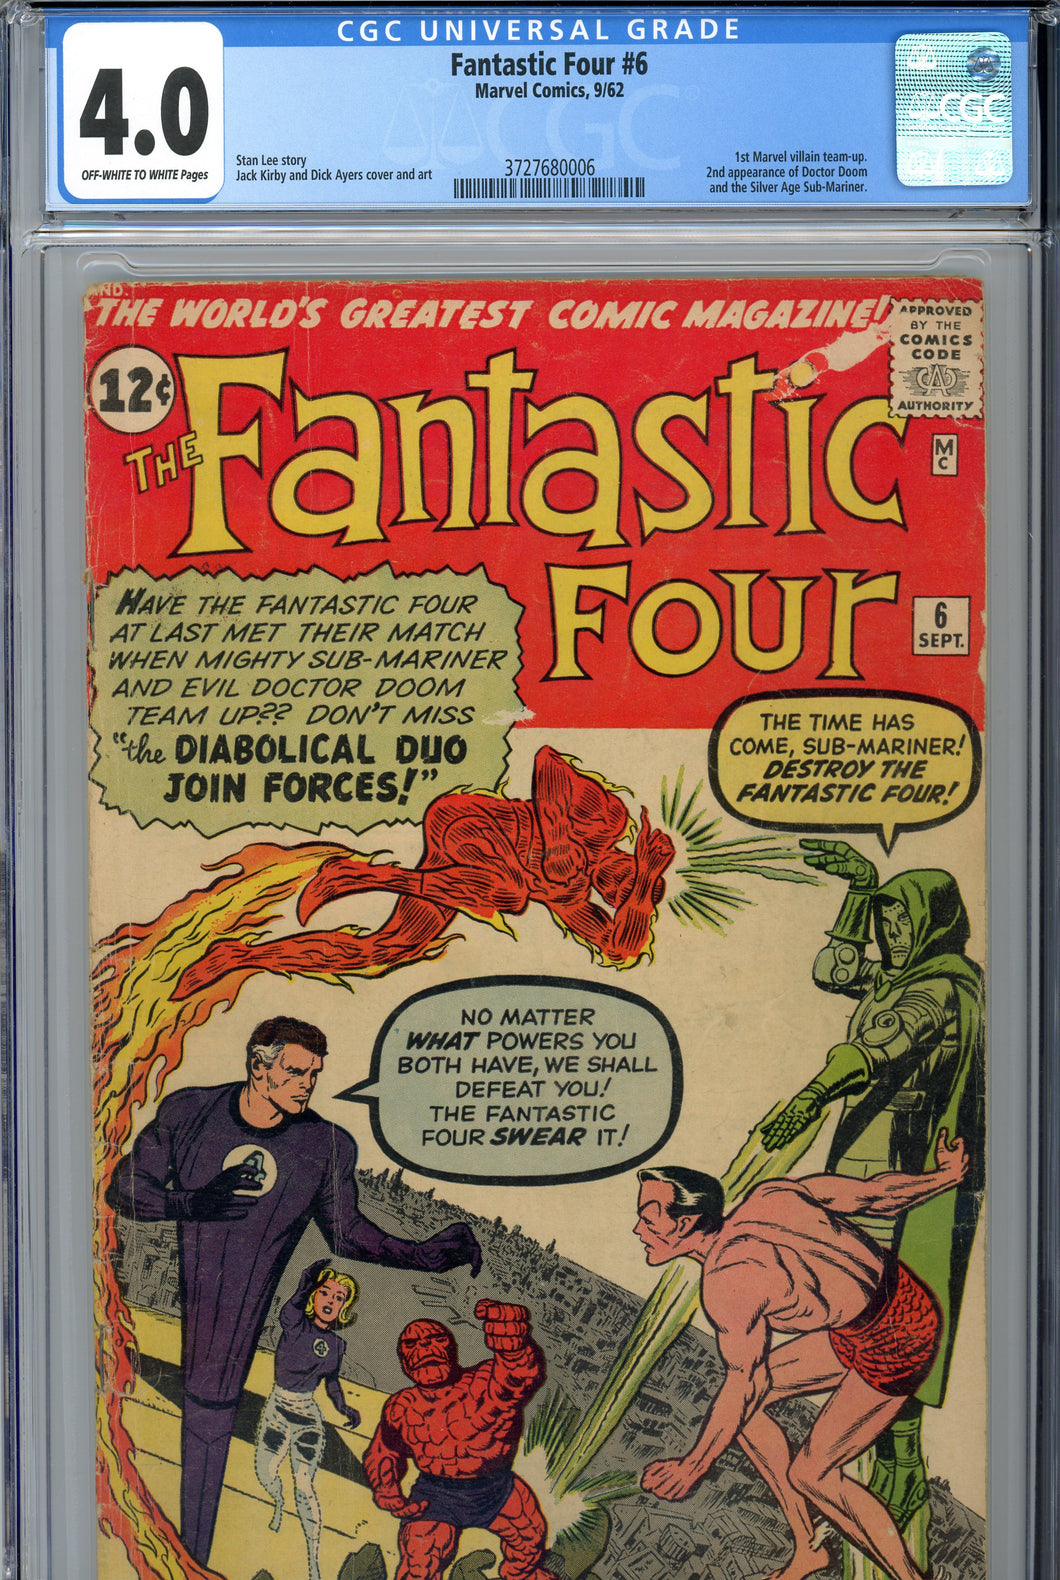 Fantastic Four #6 CGC 4.0 1st Marvel Villain Team-up